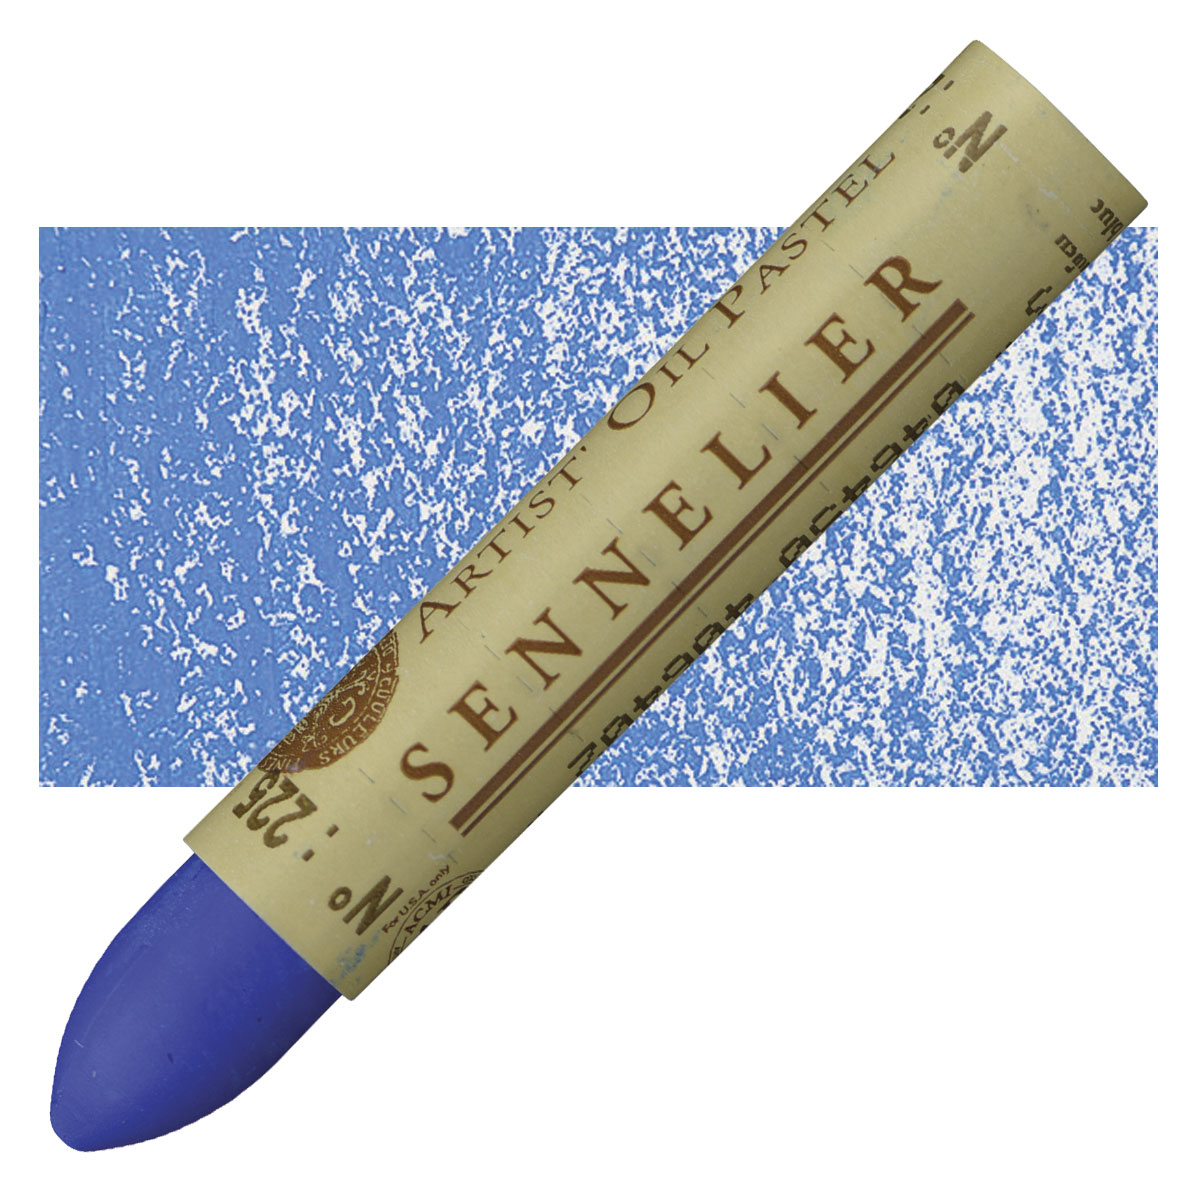 Sennelier Oil Pastel Indian Blue